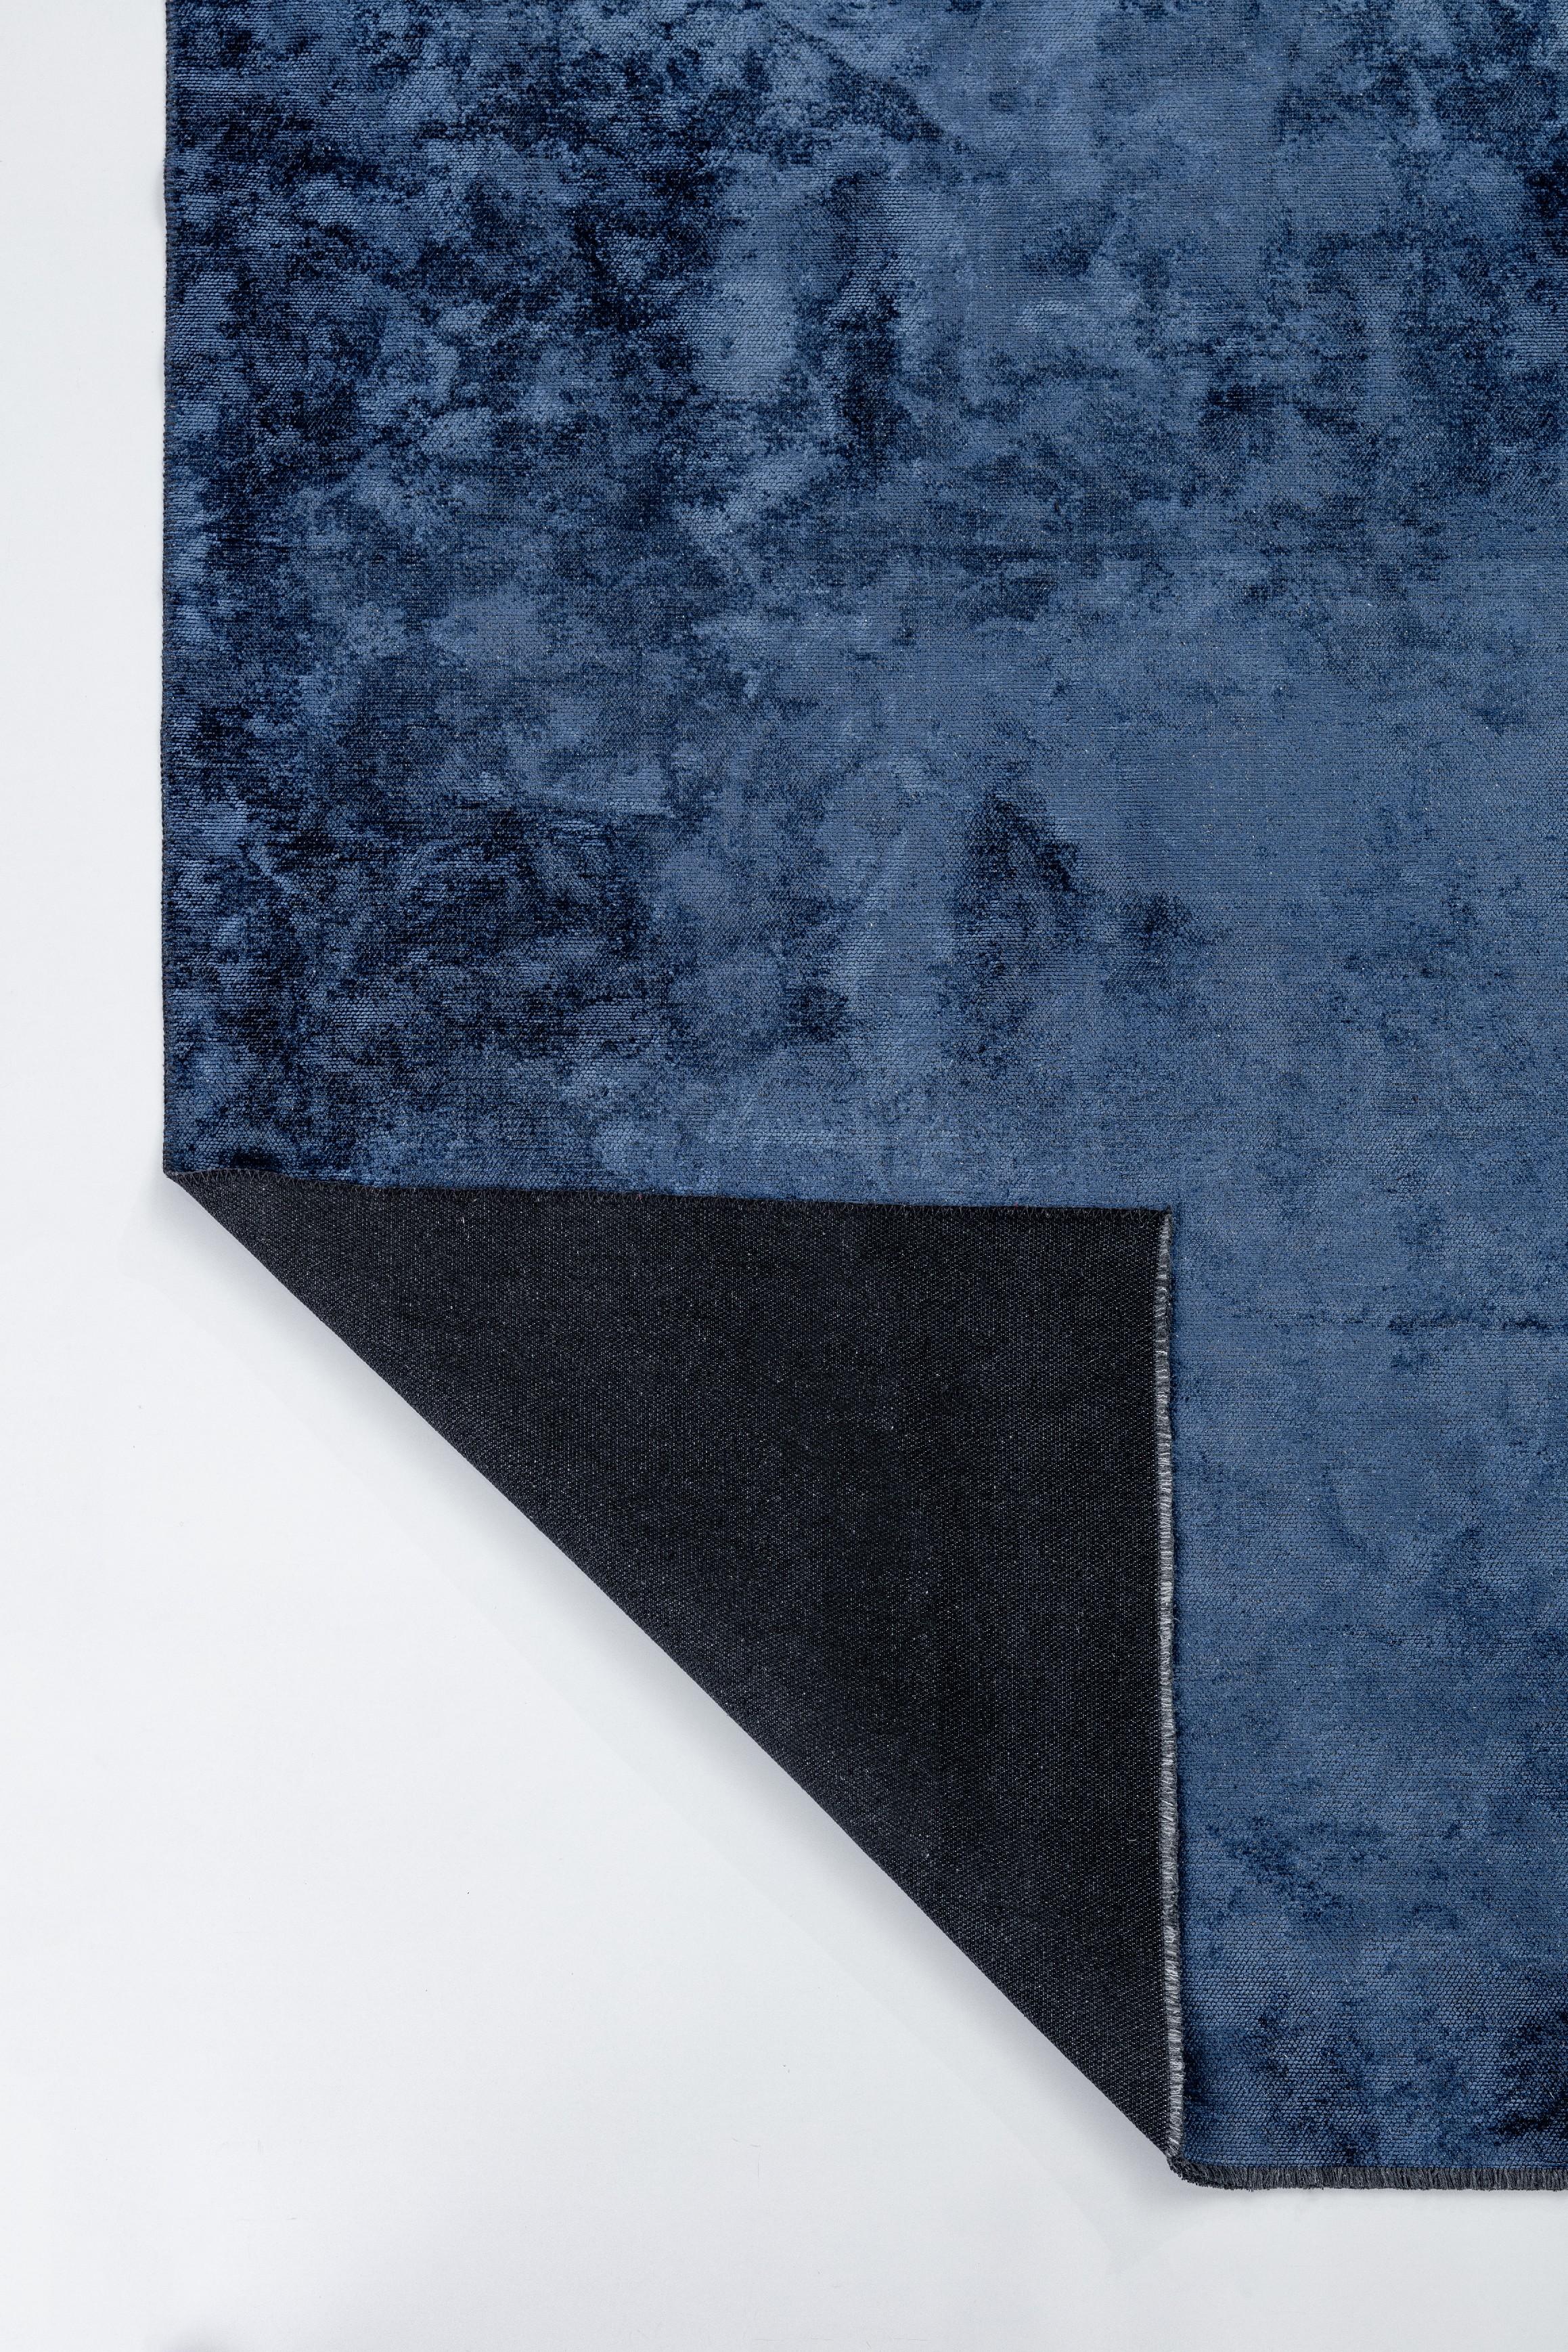 Im Angebot: Modern Solid Color Luxury Area Rug,  (Blau) 7